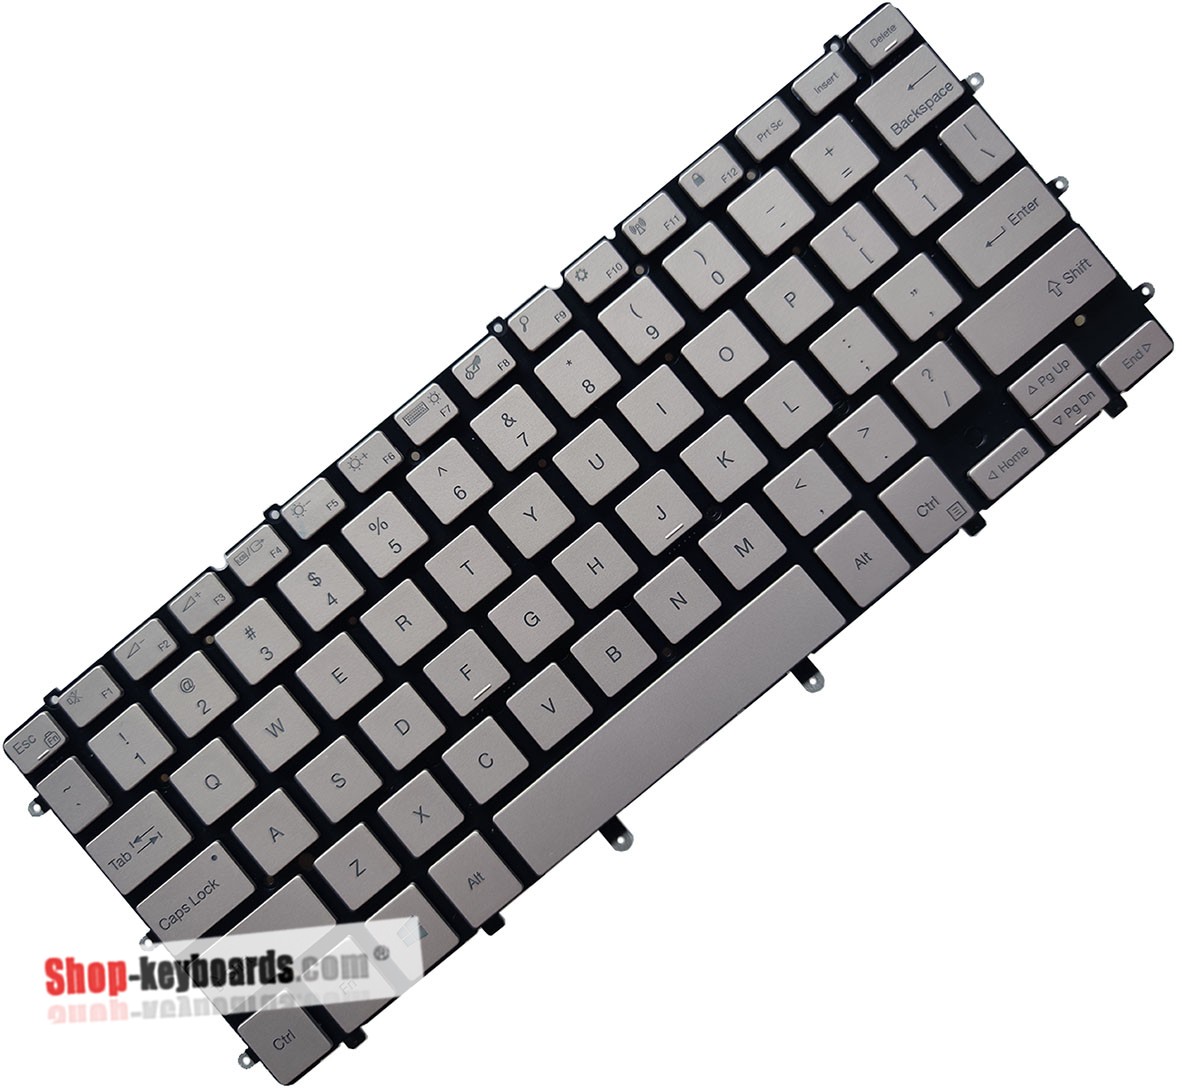 QUANTA AETX7J00020 Keyboard replacement